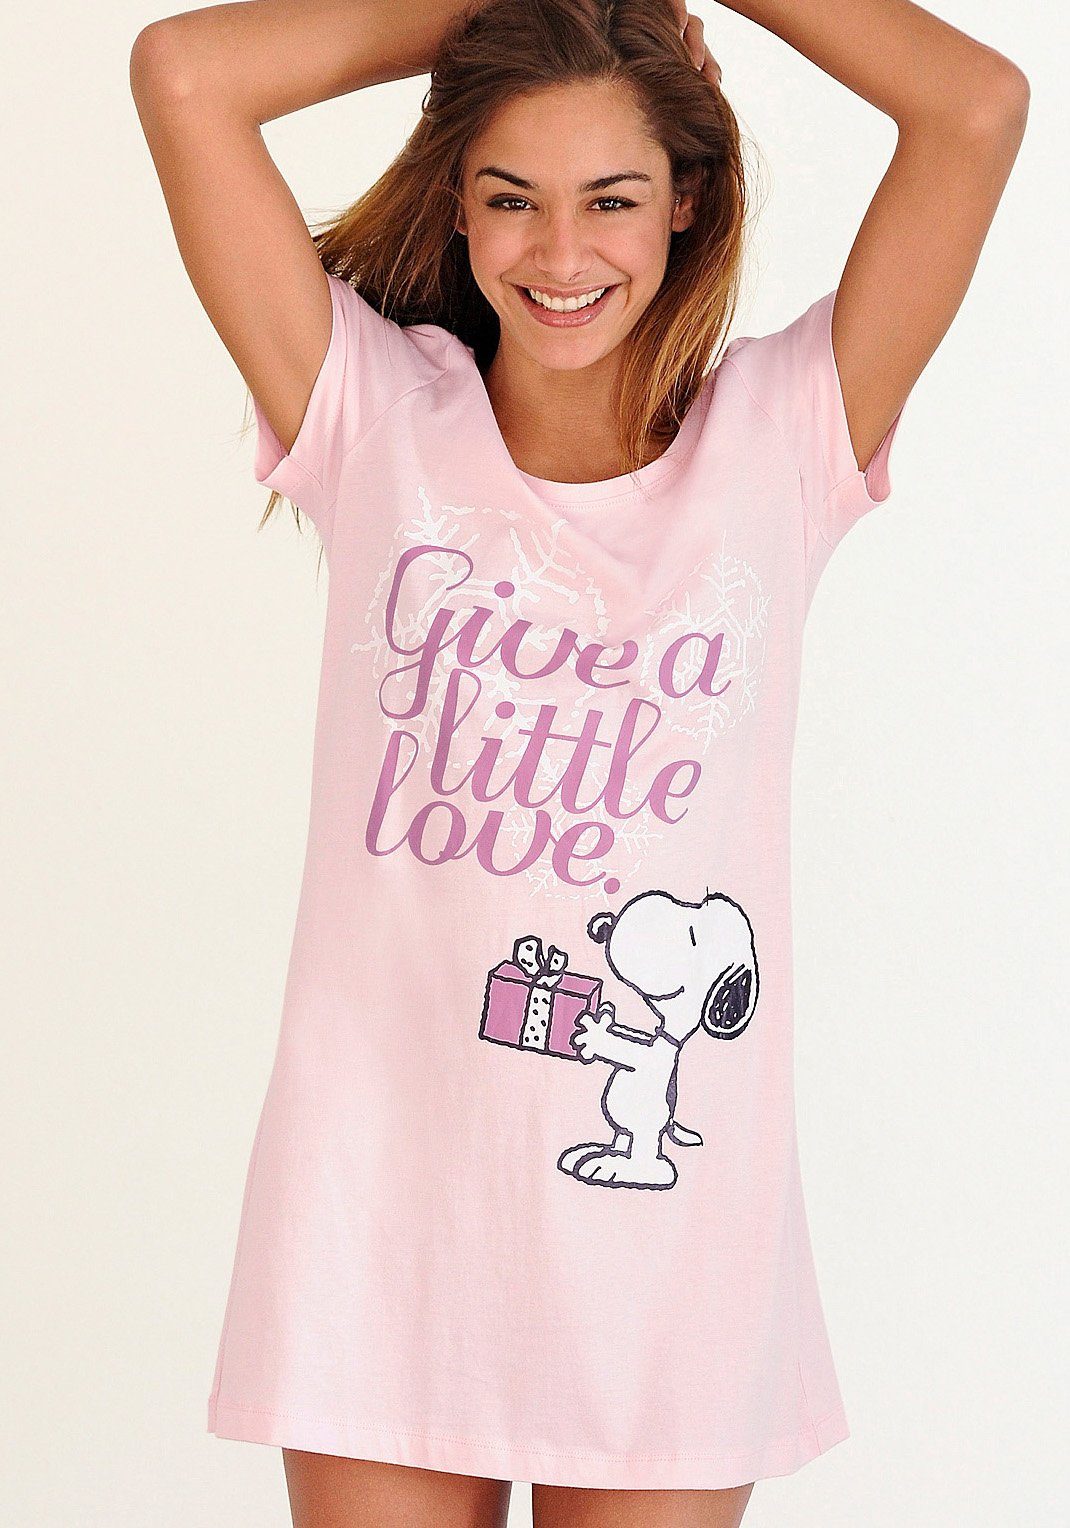 PEANUTS Sleepshirt mit Snoopy-Print in rosa Minilänge